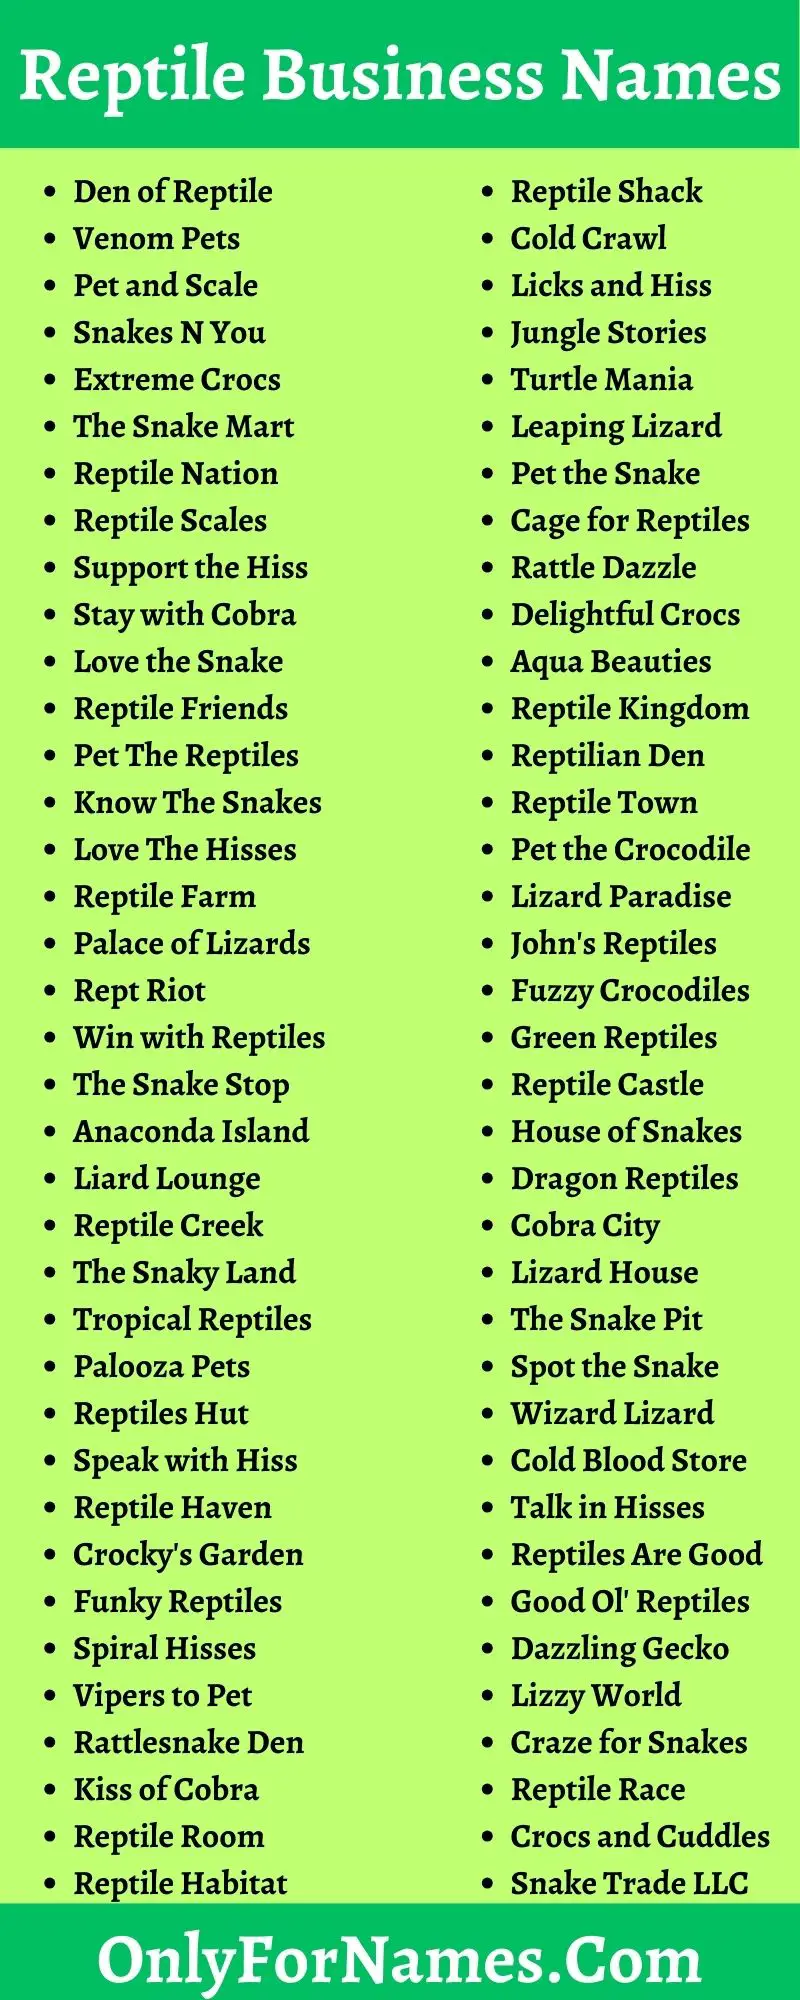 Reptile Business Names